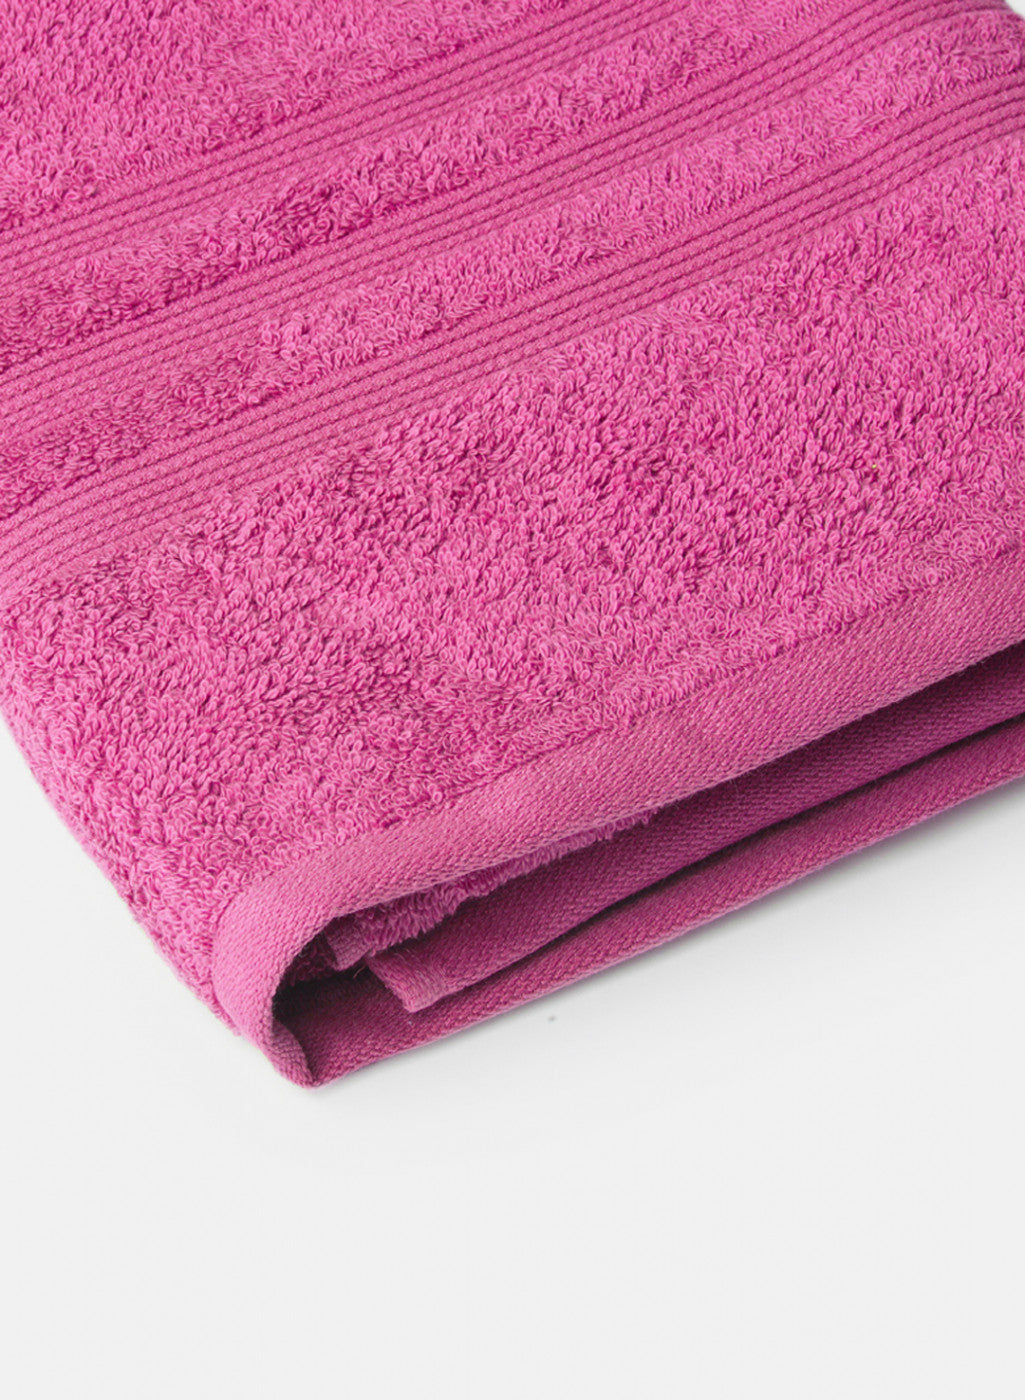 Pink Cotton 625 GSM Bath Towel